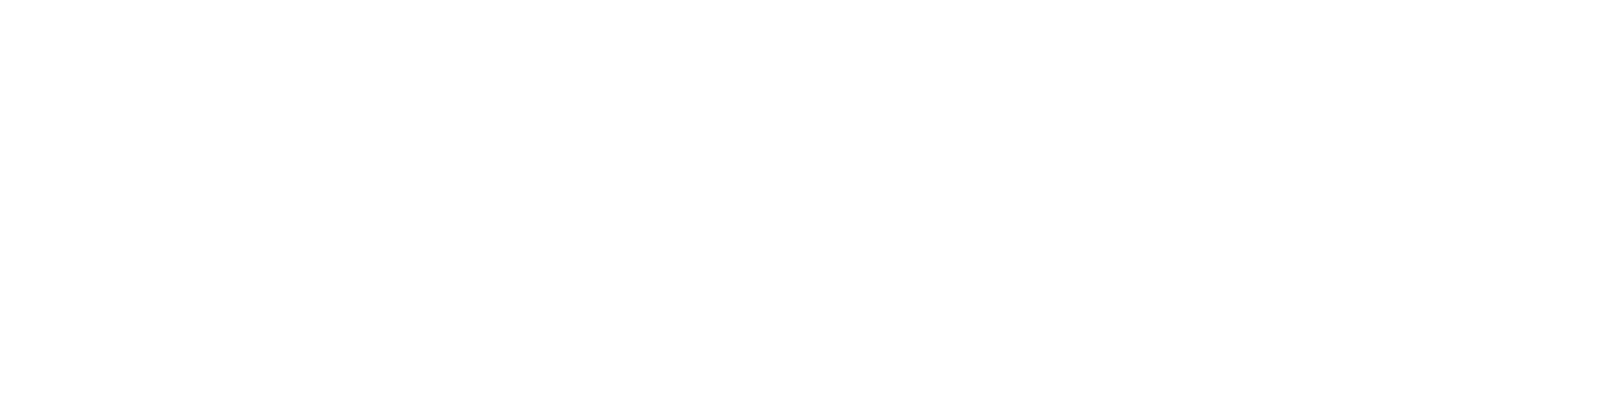 Aerojet Rocketdyne logo grand pour les fonds sombres (PNG transparent)